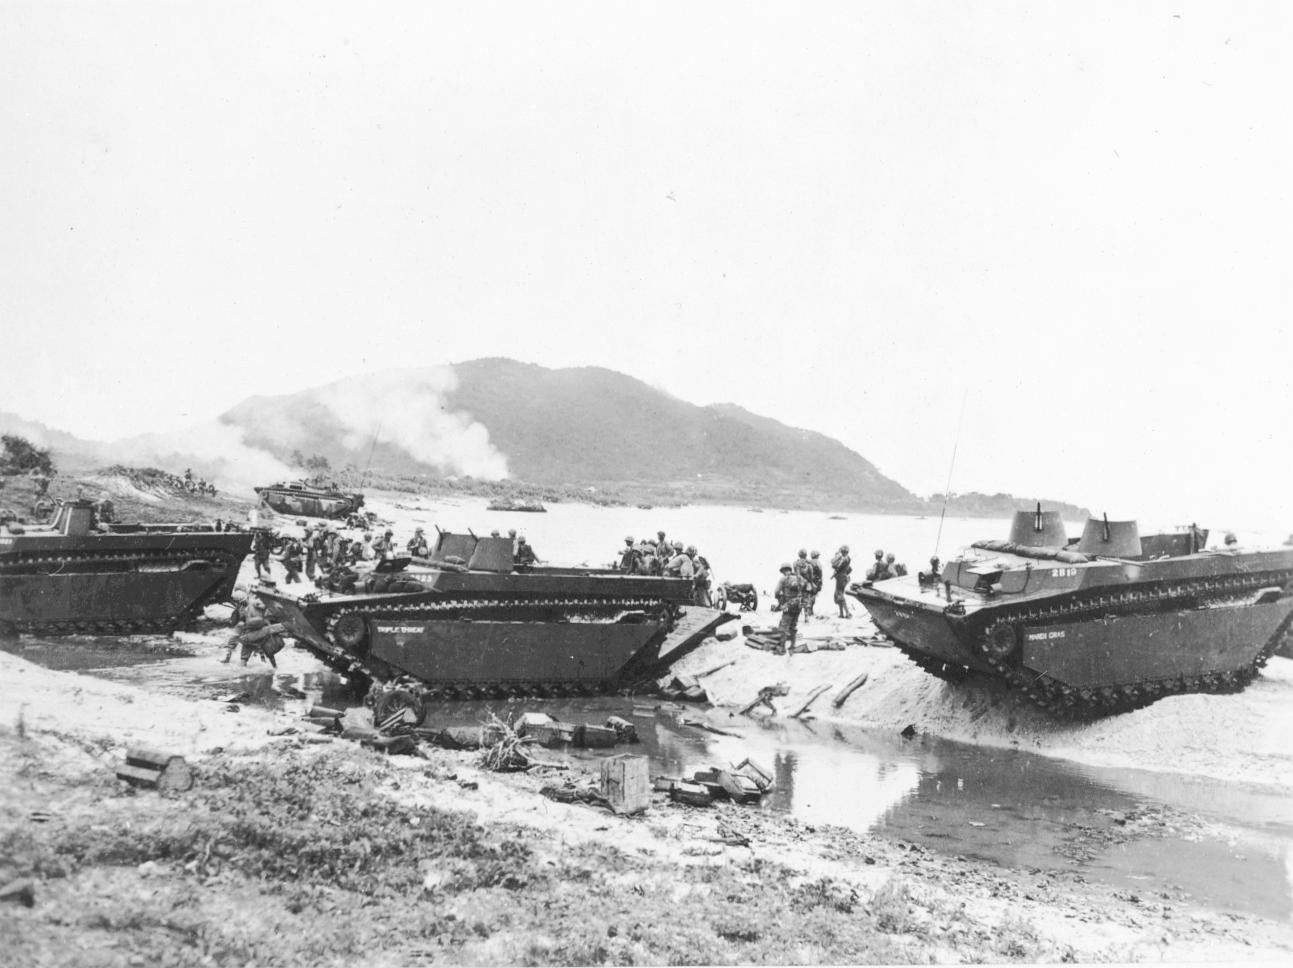 US Marine Corps 8th Regimental Combat Team landing on Iheya, Okinawa, Japan, 3 Jun 1945